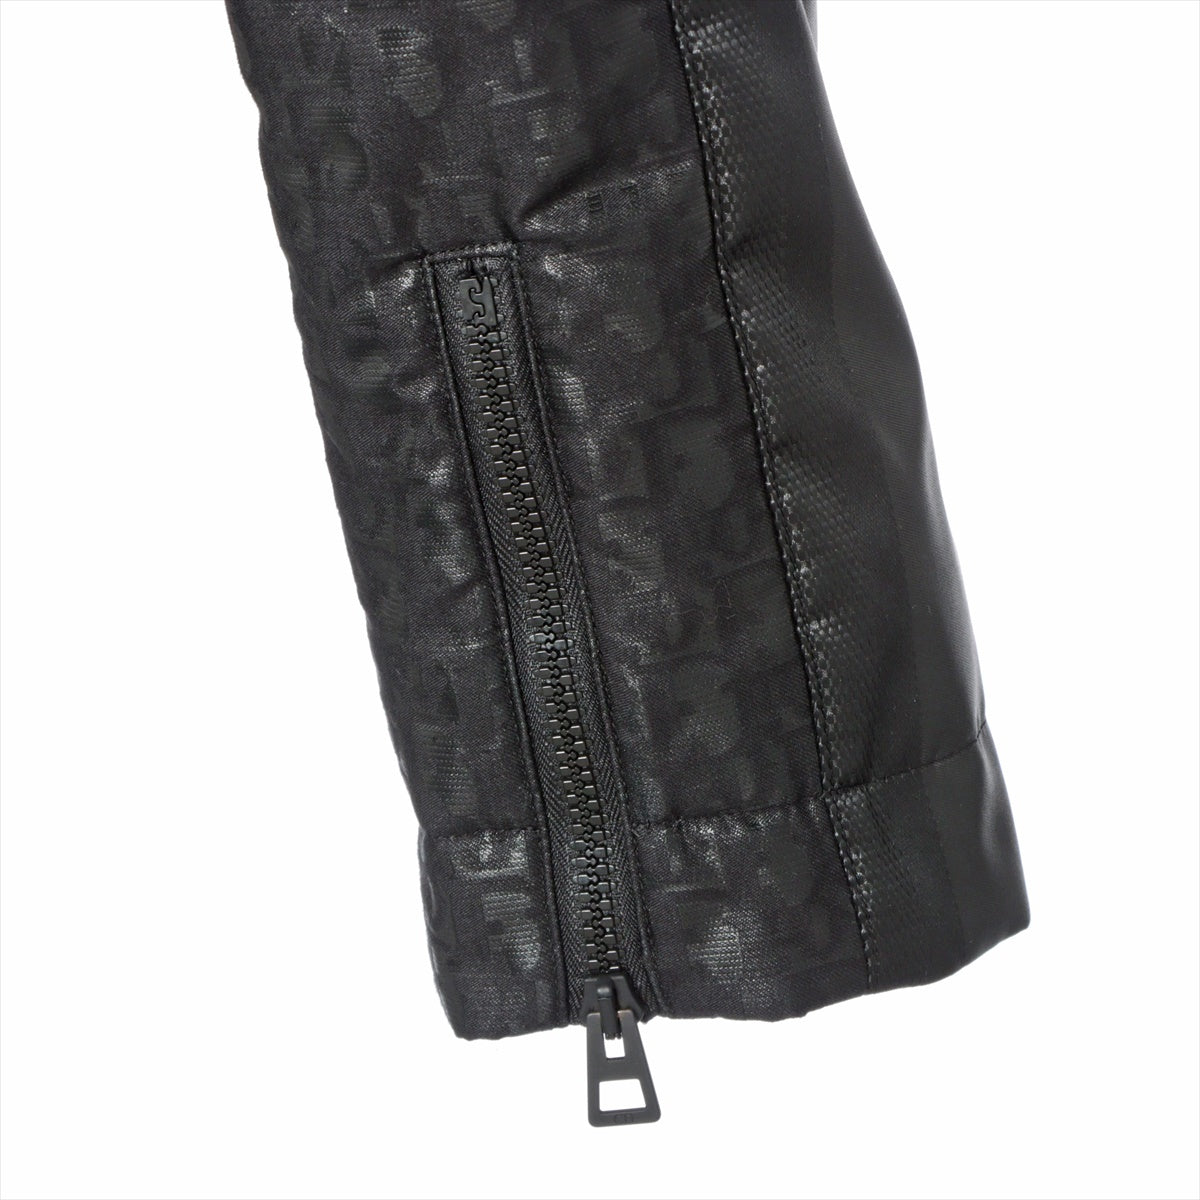 Christian Dior Oblique Cotton & Polyester Jacket 38 Ladies' Black  147V17A2762